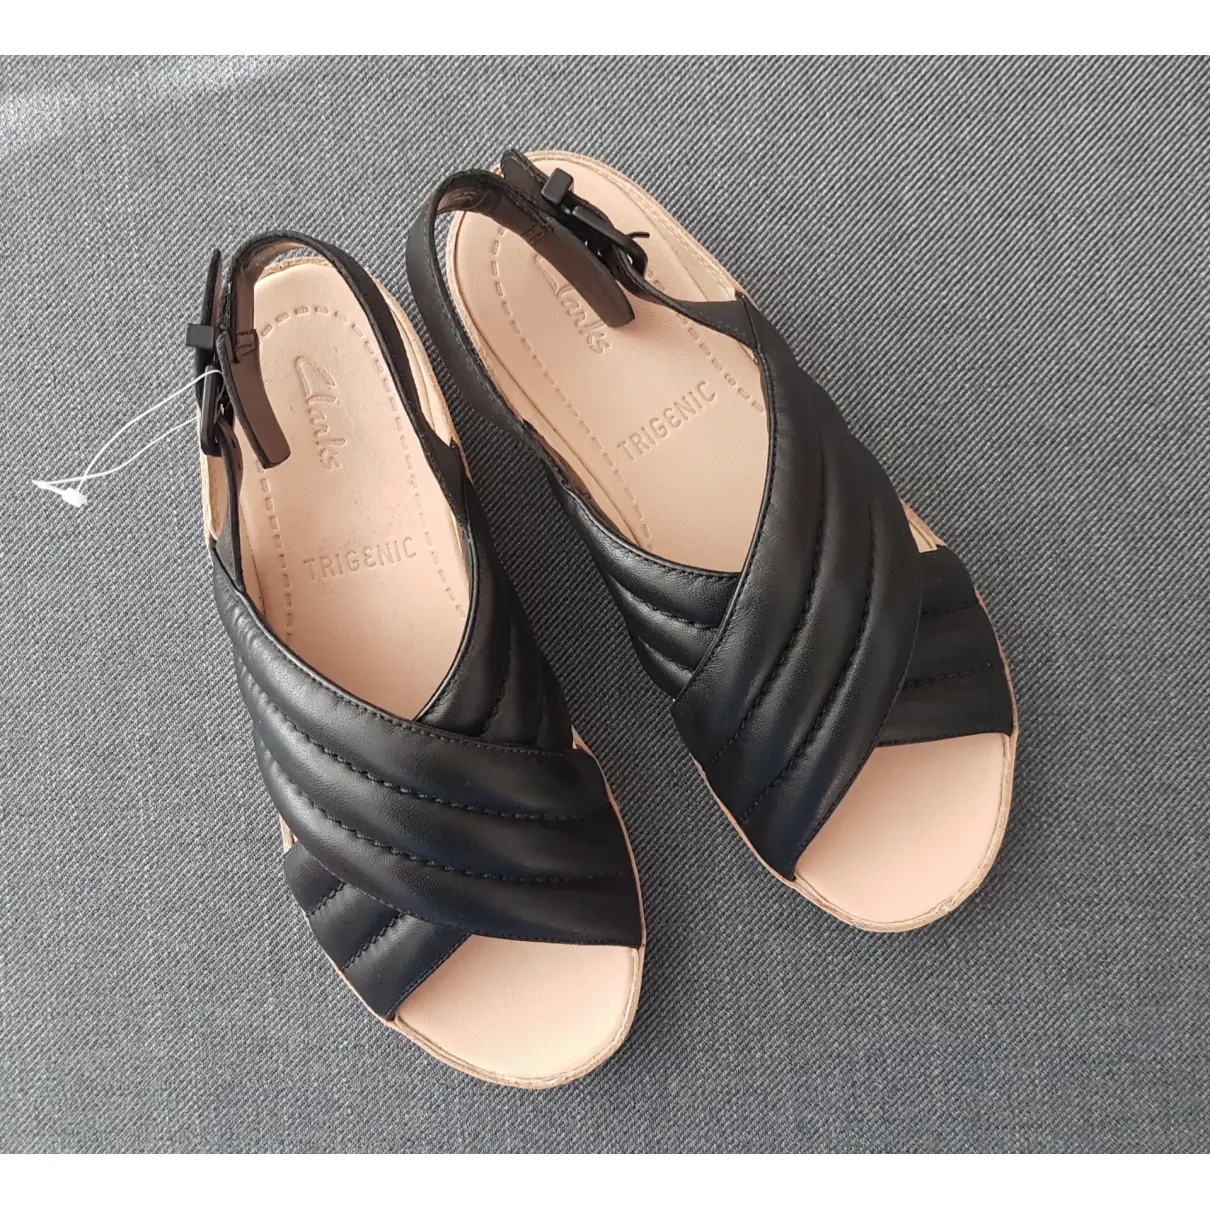 Buy Clarks Leather sandal online